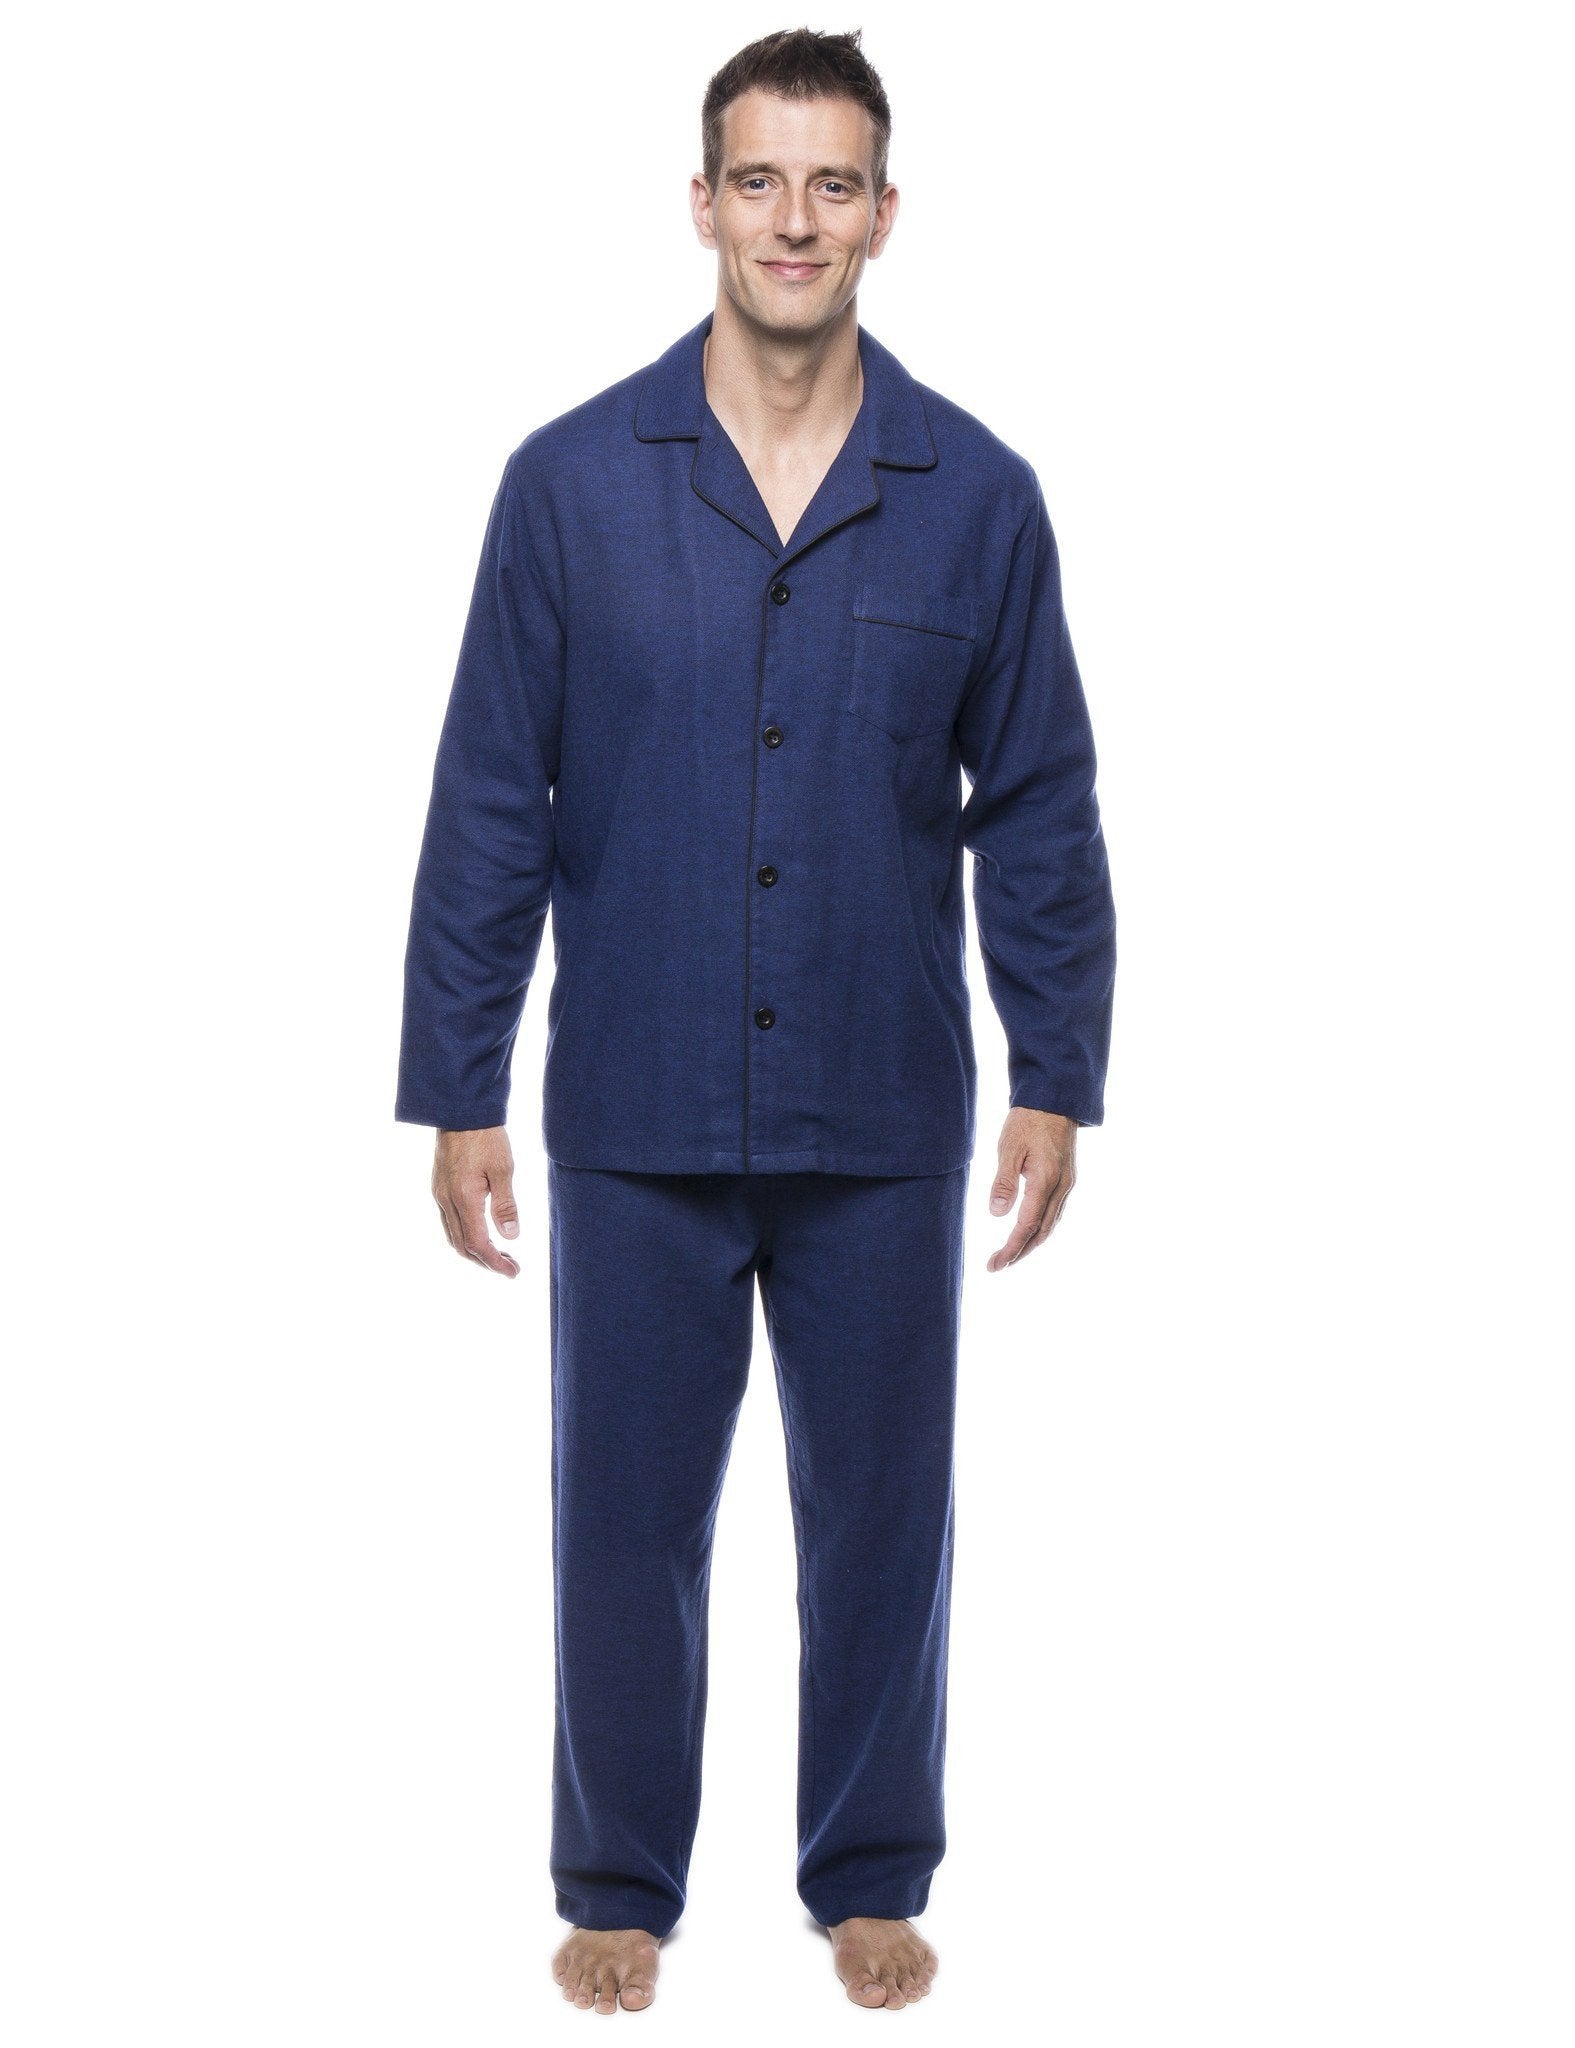 Men's 100% Cotton Flannel Pajama Set - Herringbone Blue/Black